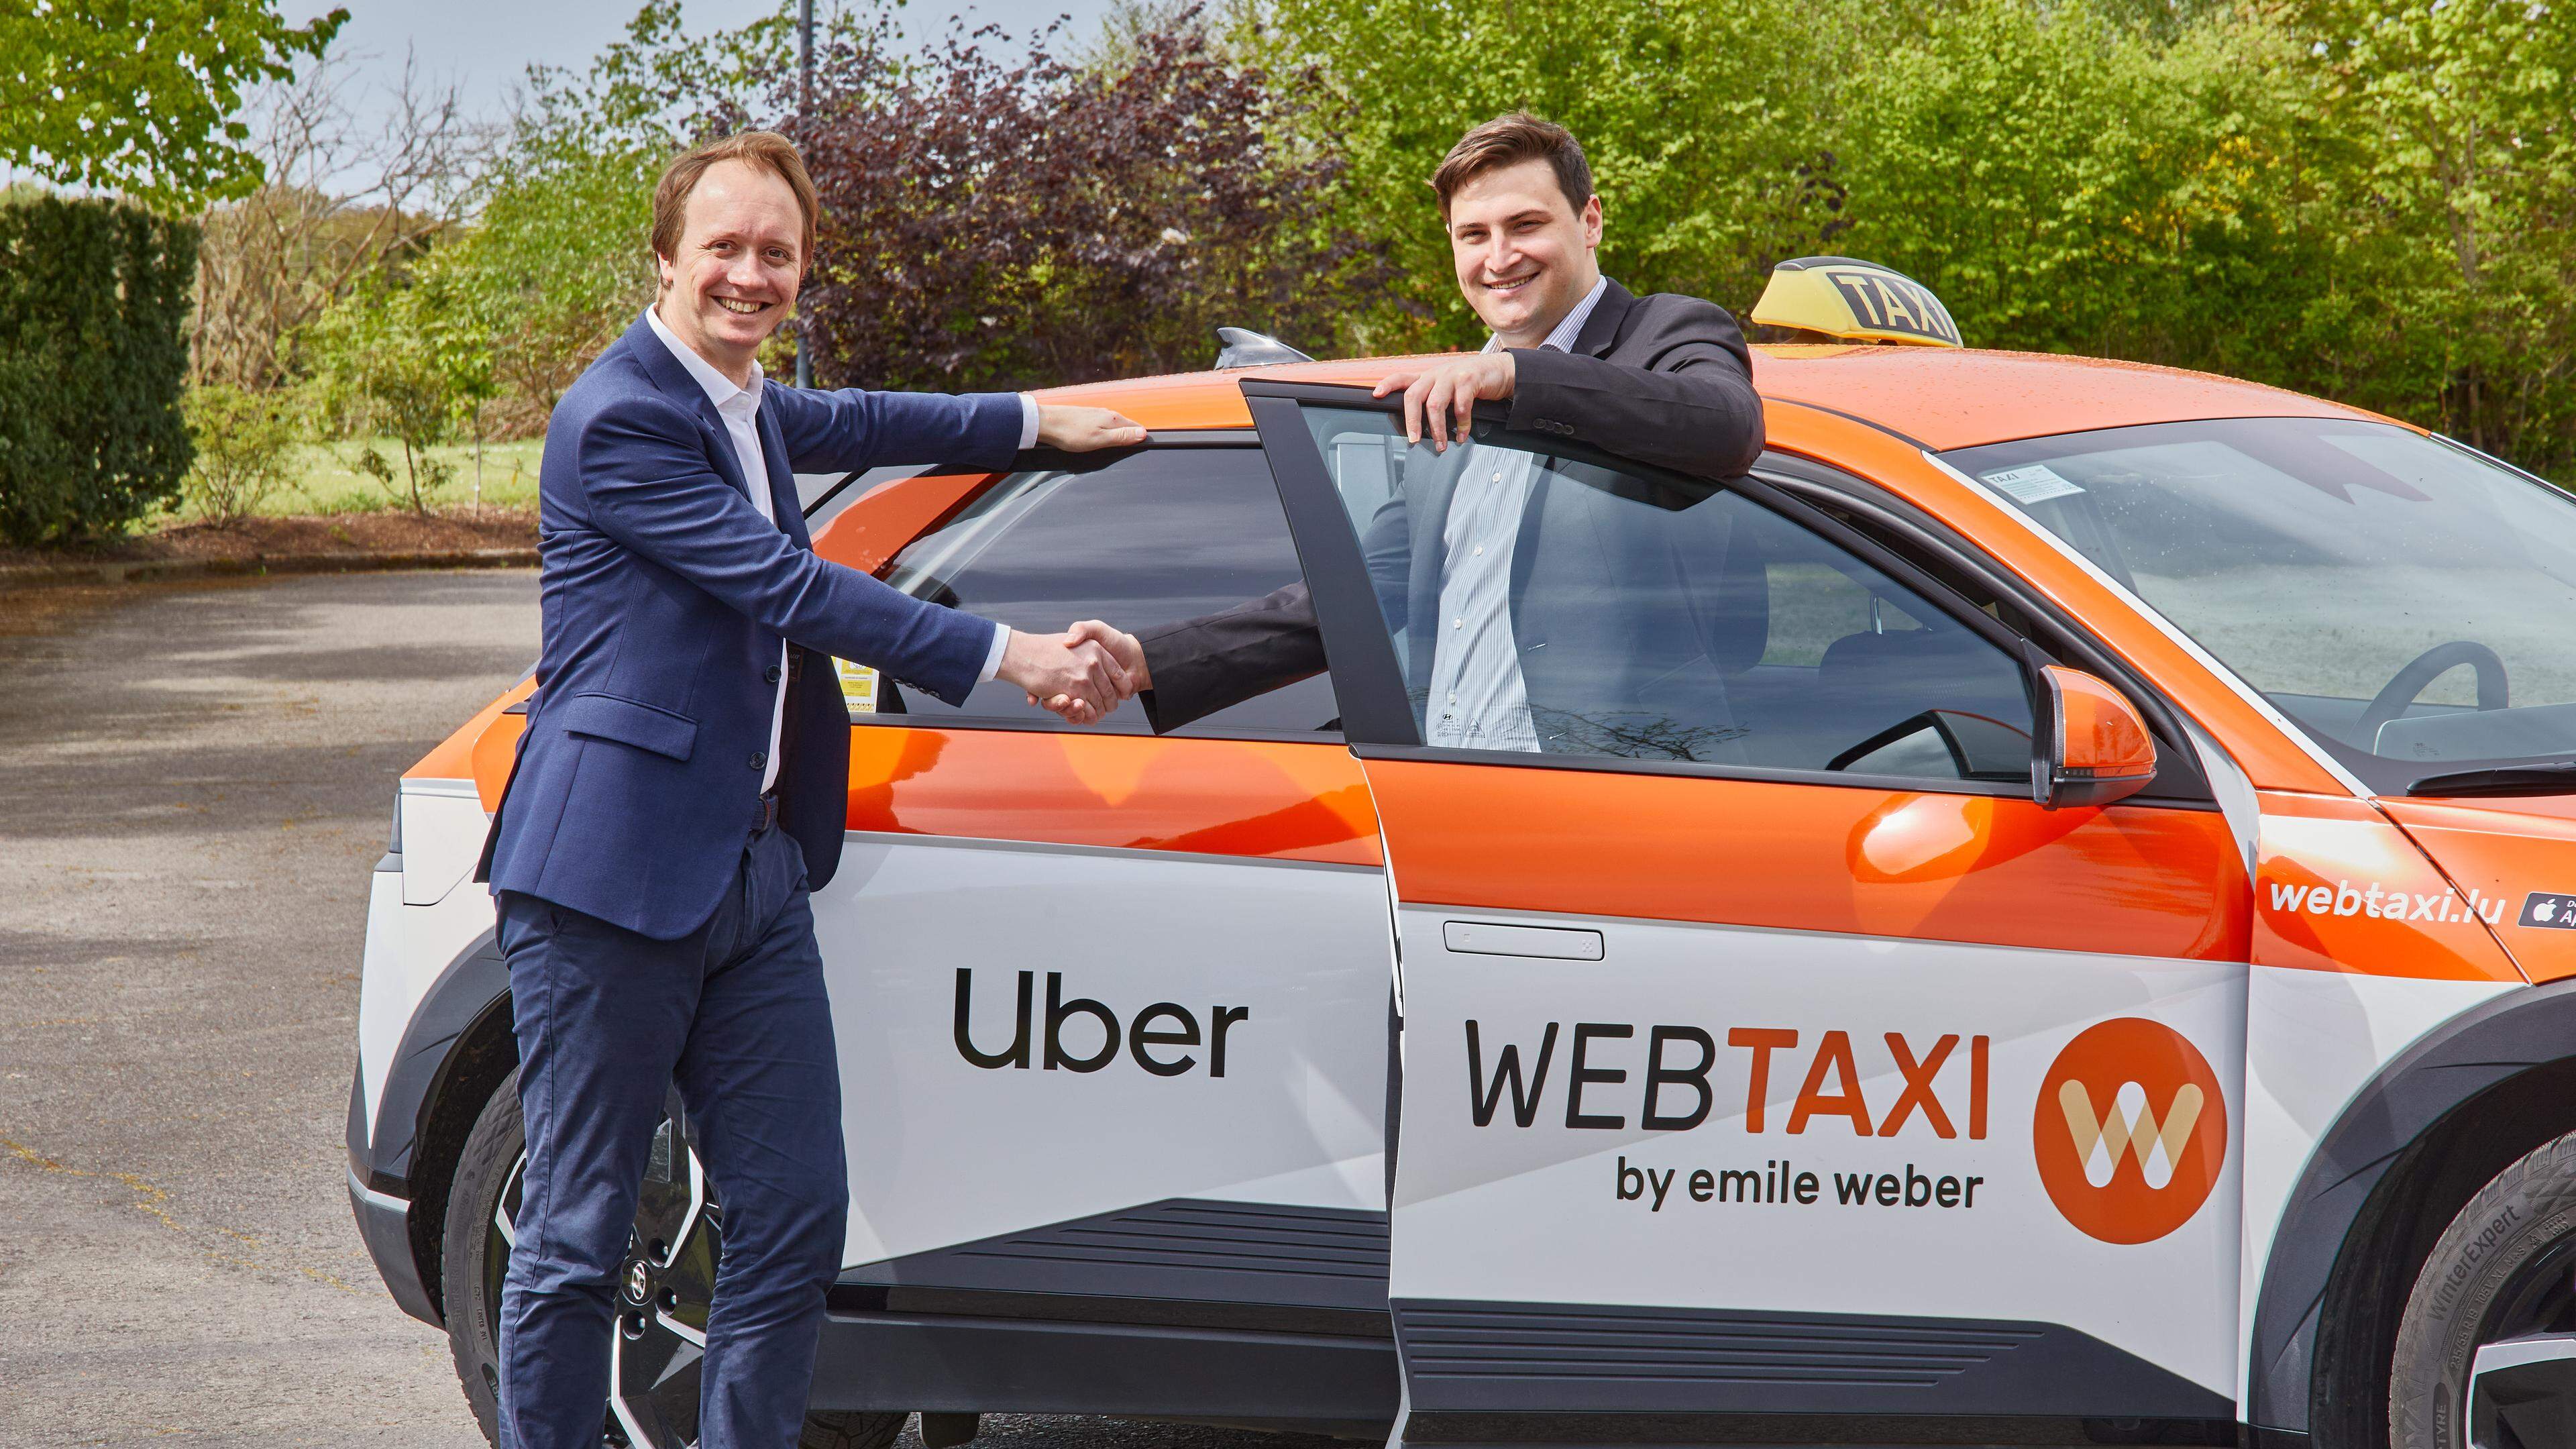 Laurent Slits, Director at Uber Belgium (left), and Emile Weber, Member of the Board at Webtaxi, presented the new partnership on Thursday.  